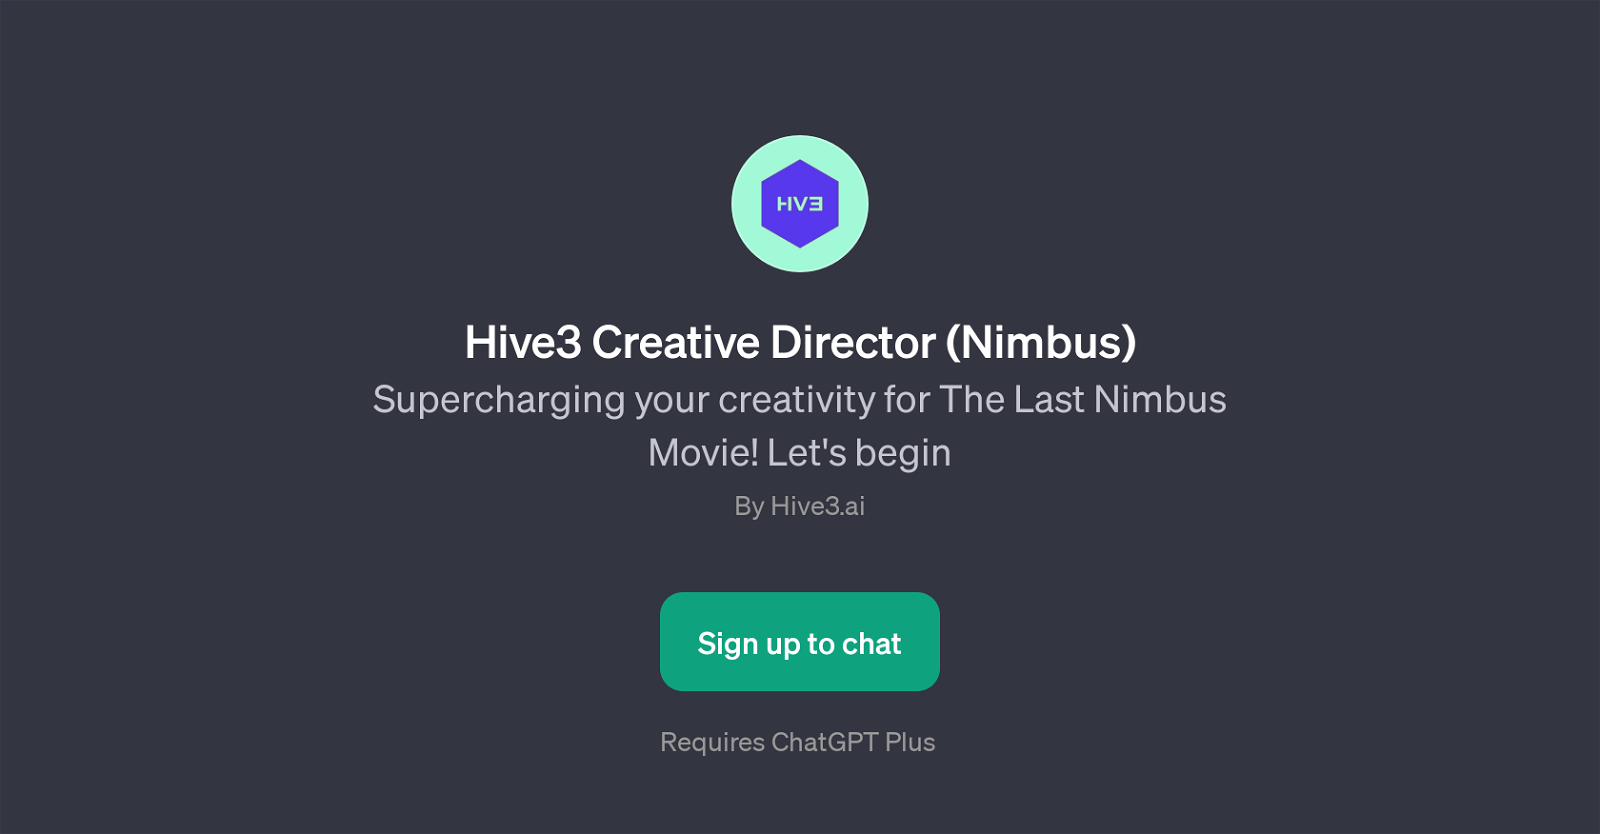 Hive3 Creative Director (Nimbus) website